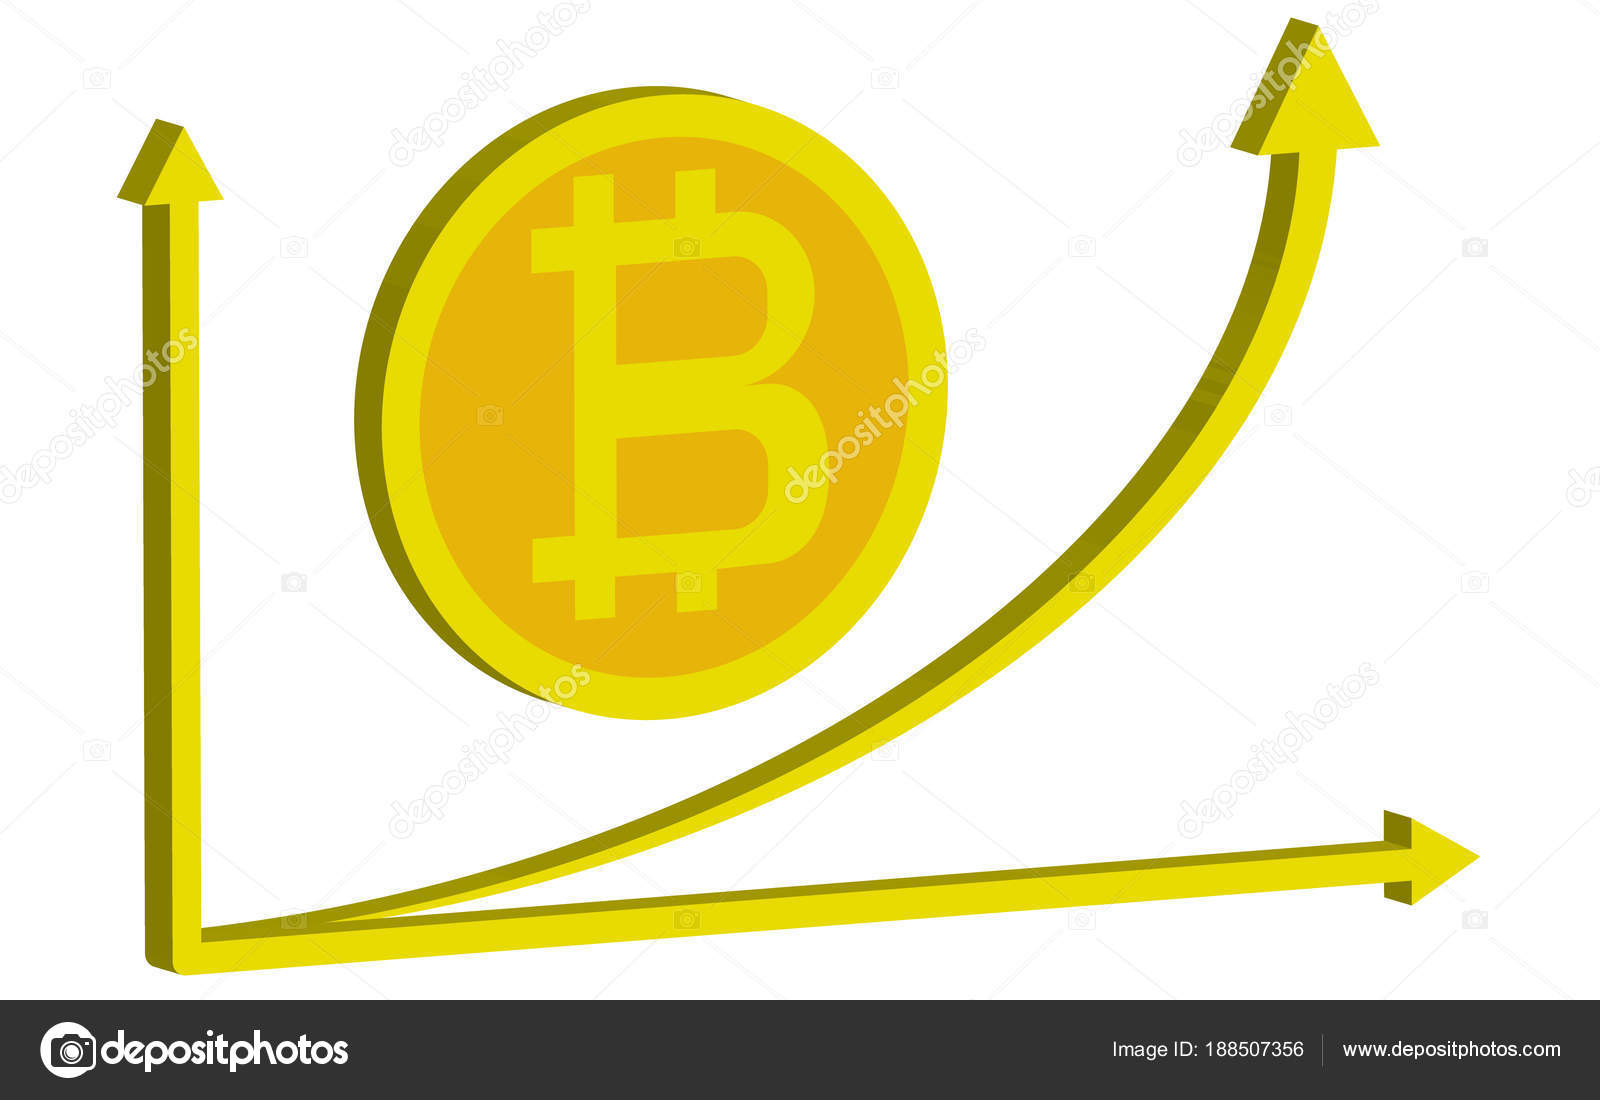 Growth Of Bitcoin Chart